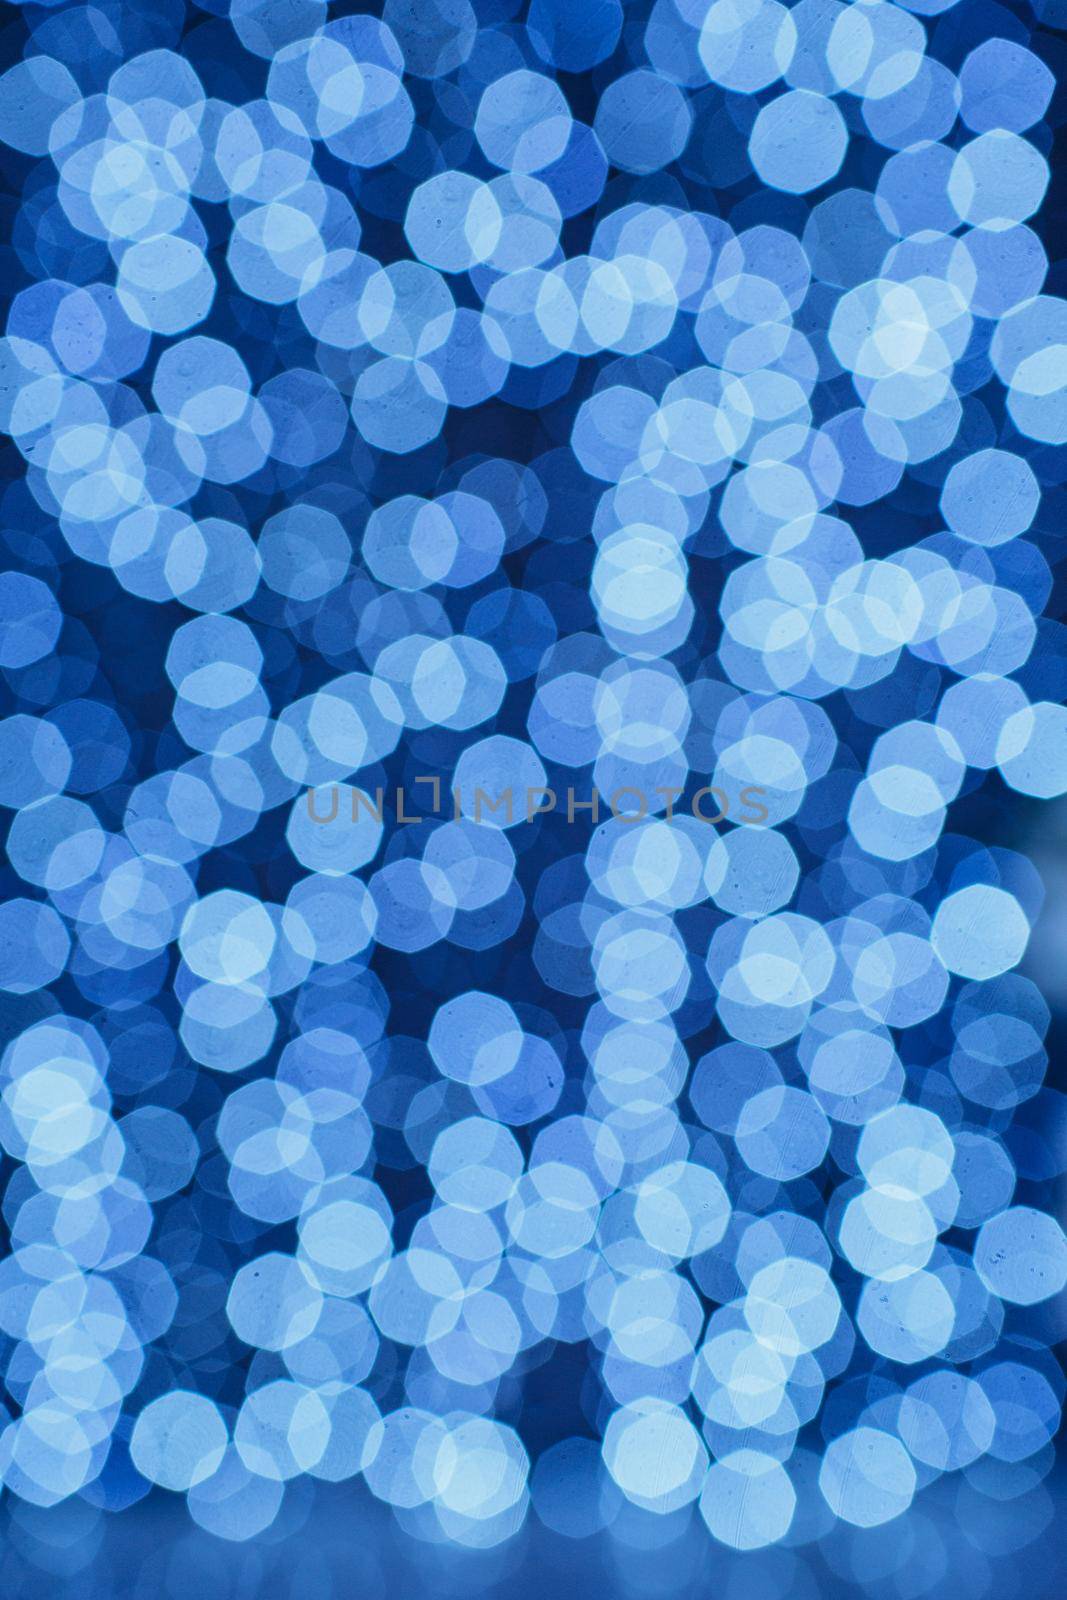 Blue ornament with beautiful blur spots bokeh by deandy